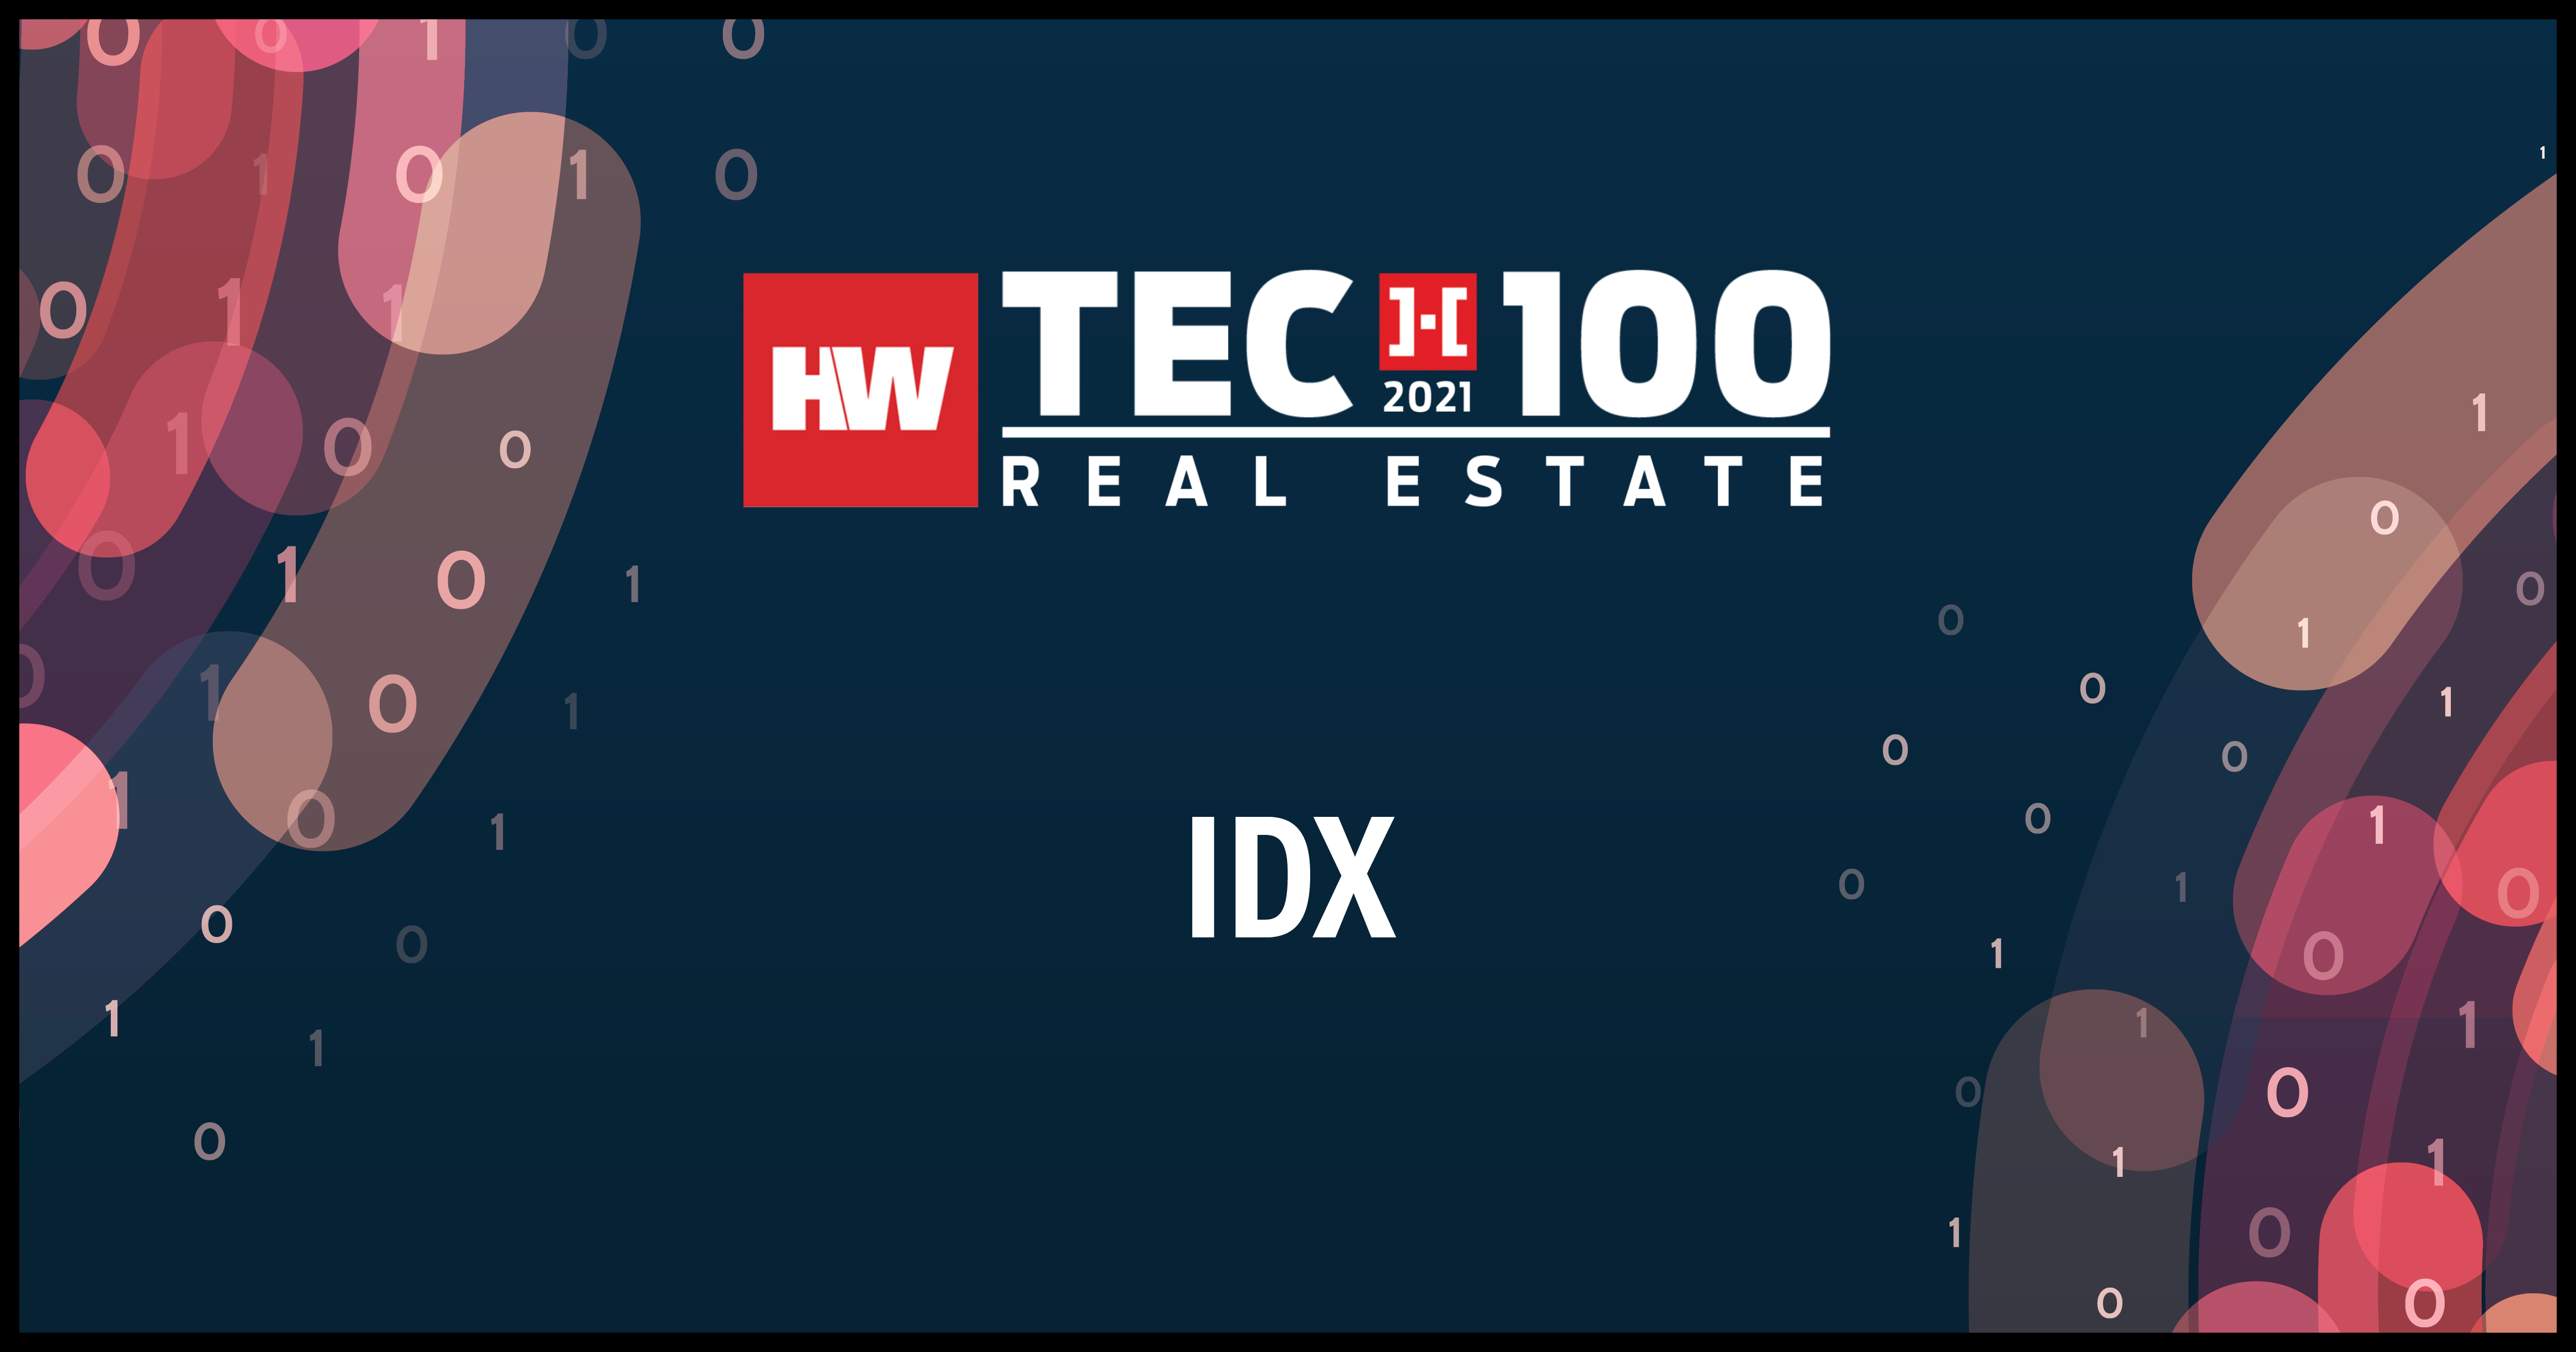 Idx mls Real estate website with elementor builder 2020 by Himel Muqtadir  on Dribbble